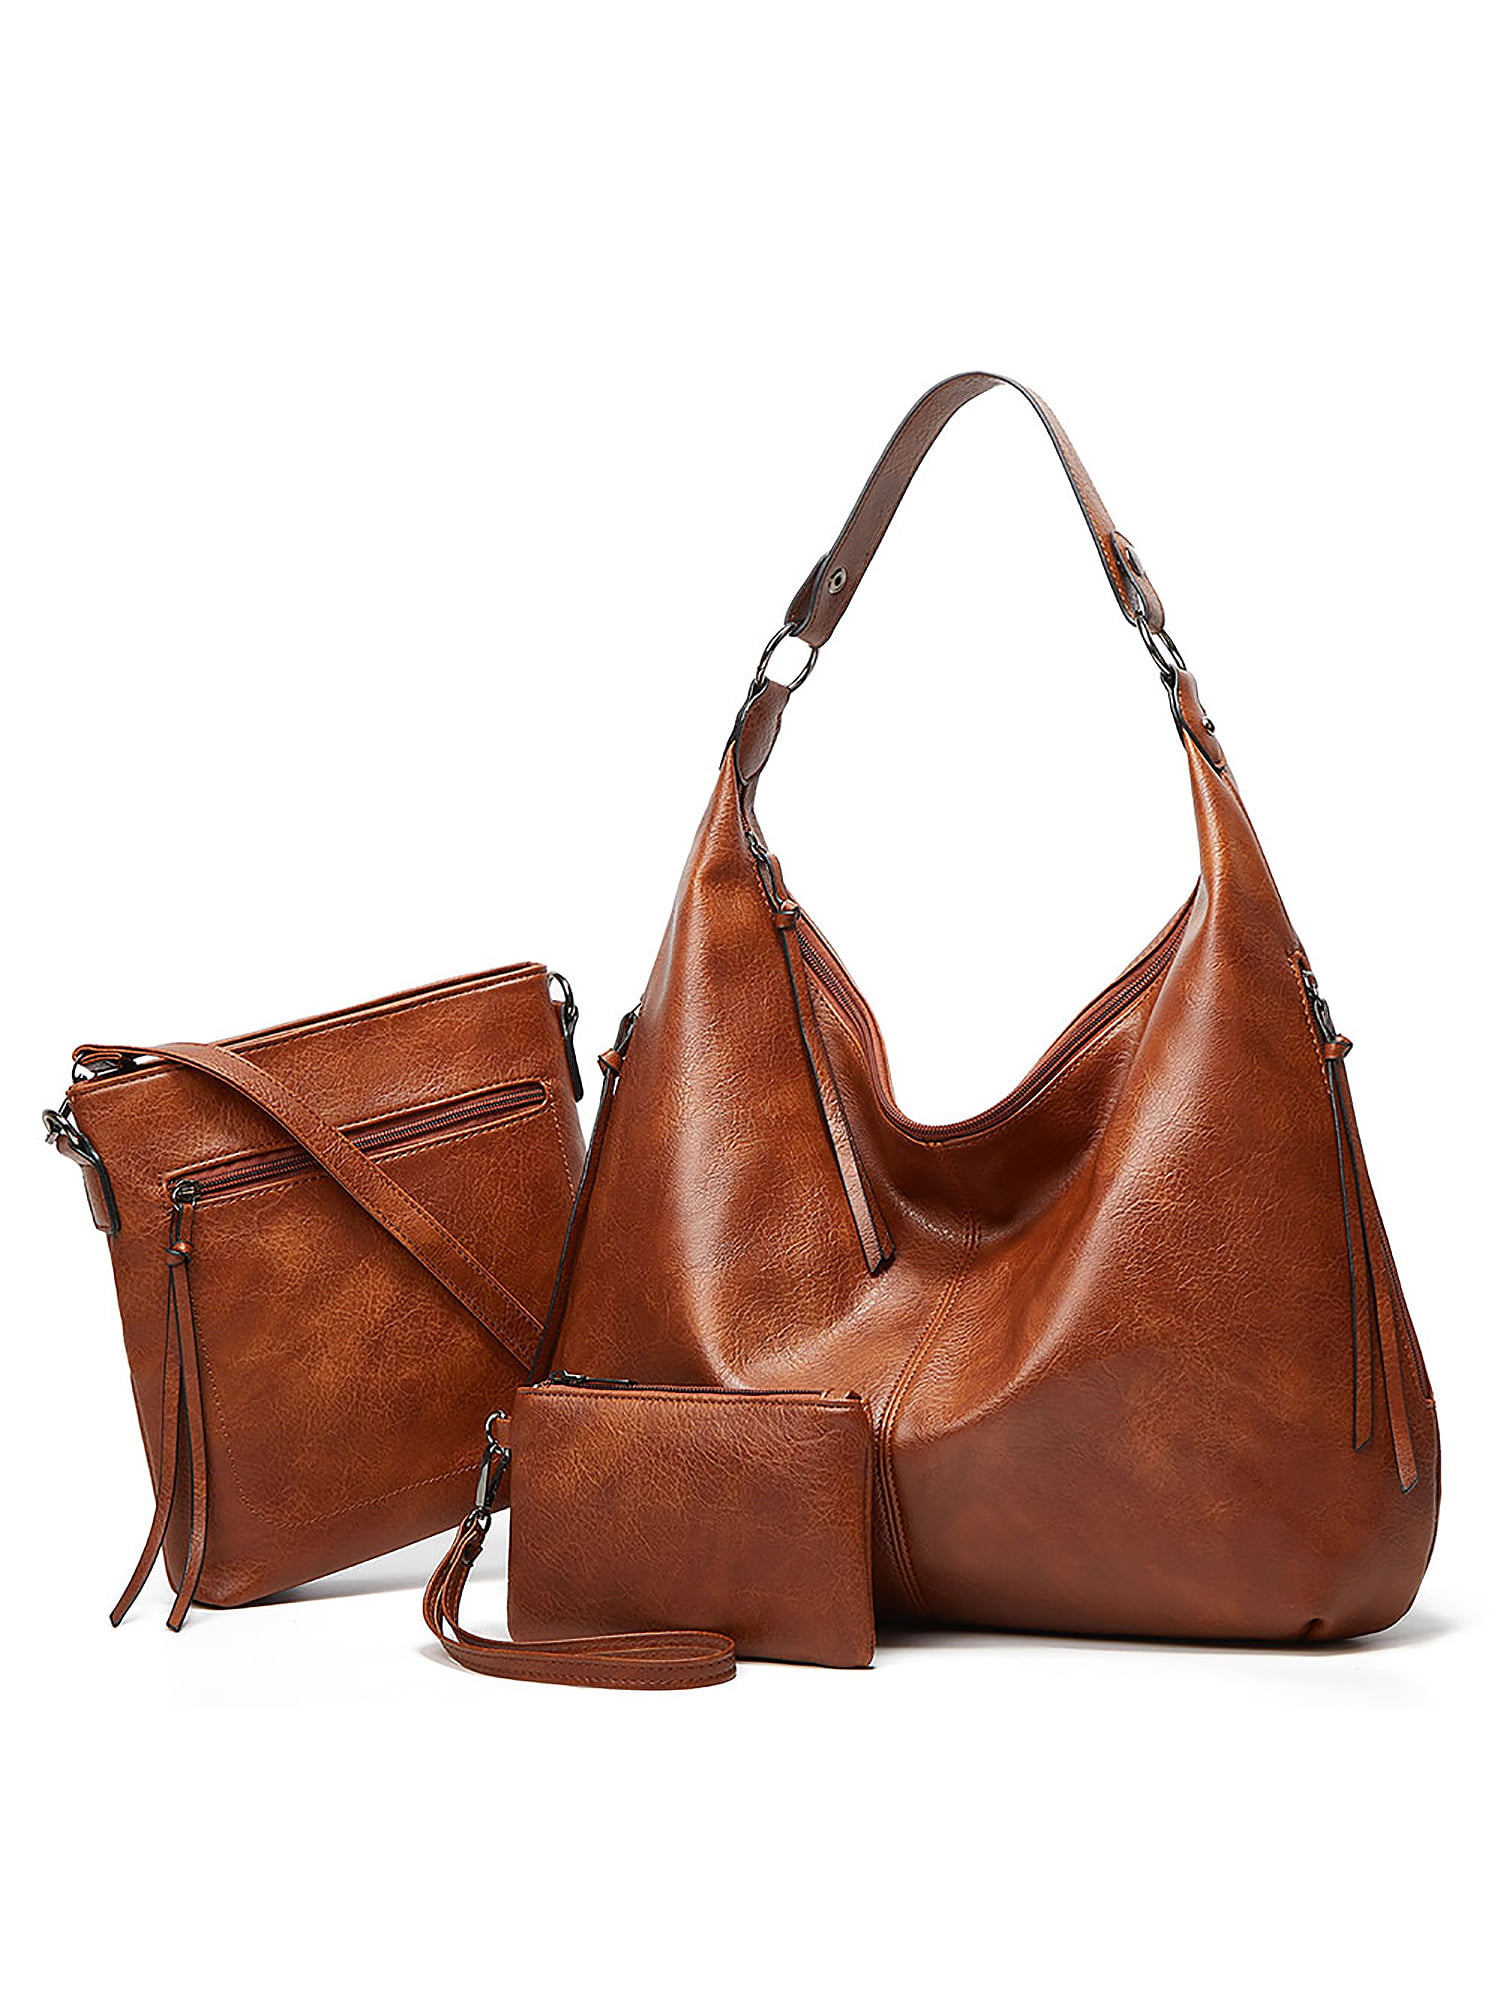 Women Messenger Shoulder Bag Handbags Faux Leather Crossbody Purse Tote Satchel 